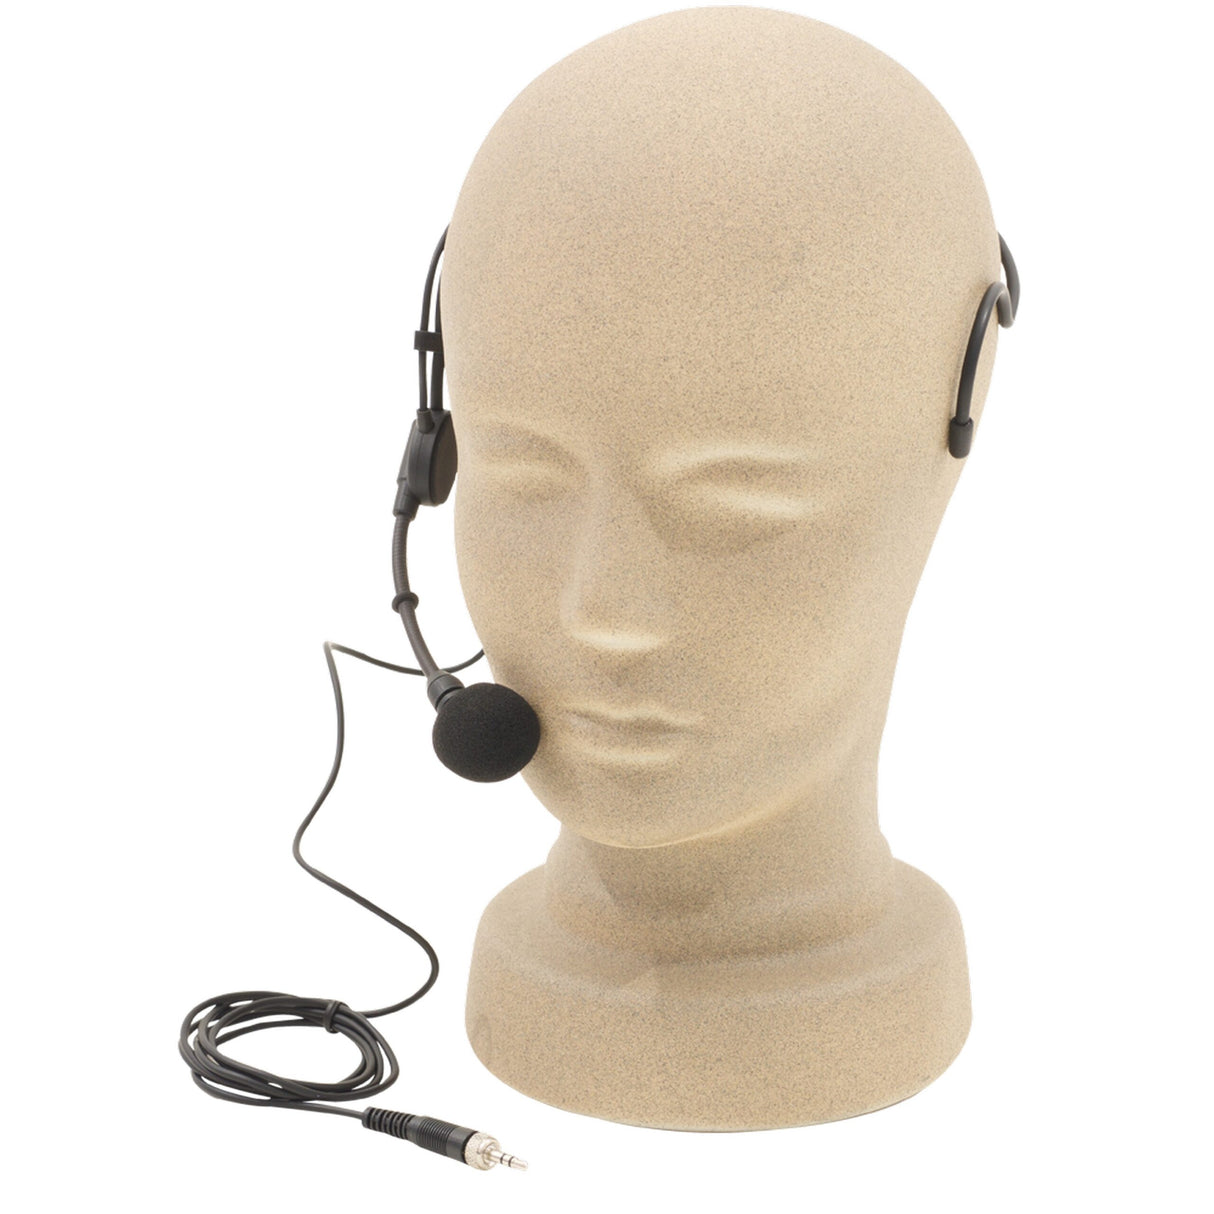 Anchor Audio HBM-LINK Headband Microphone with 3.5mm Plug